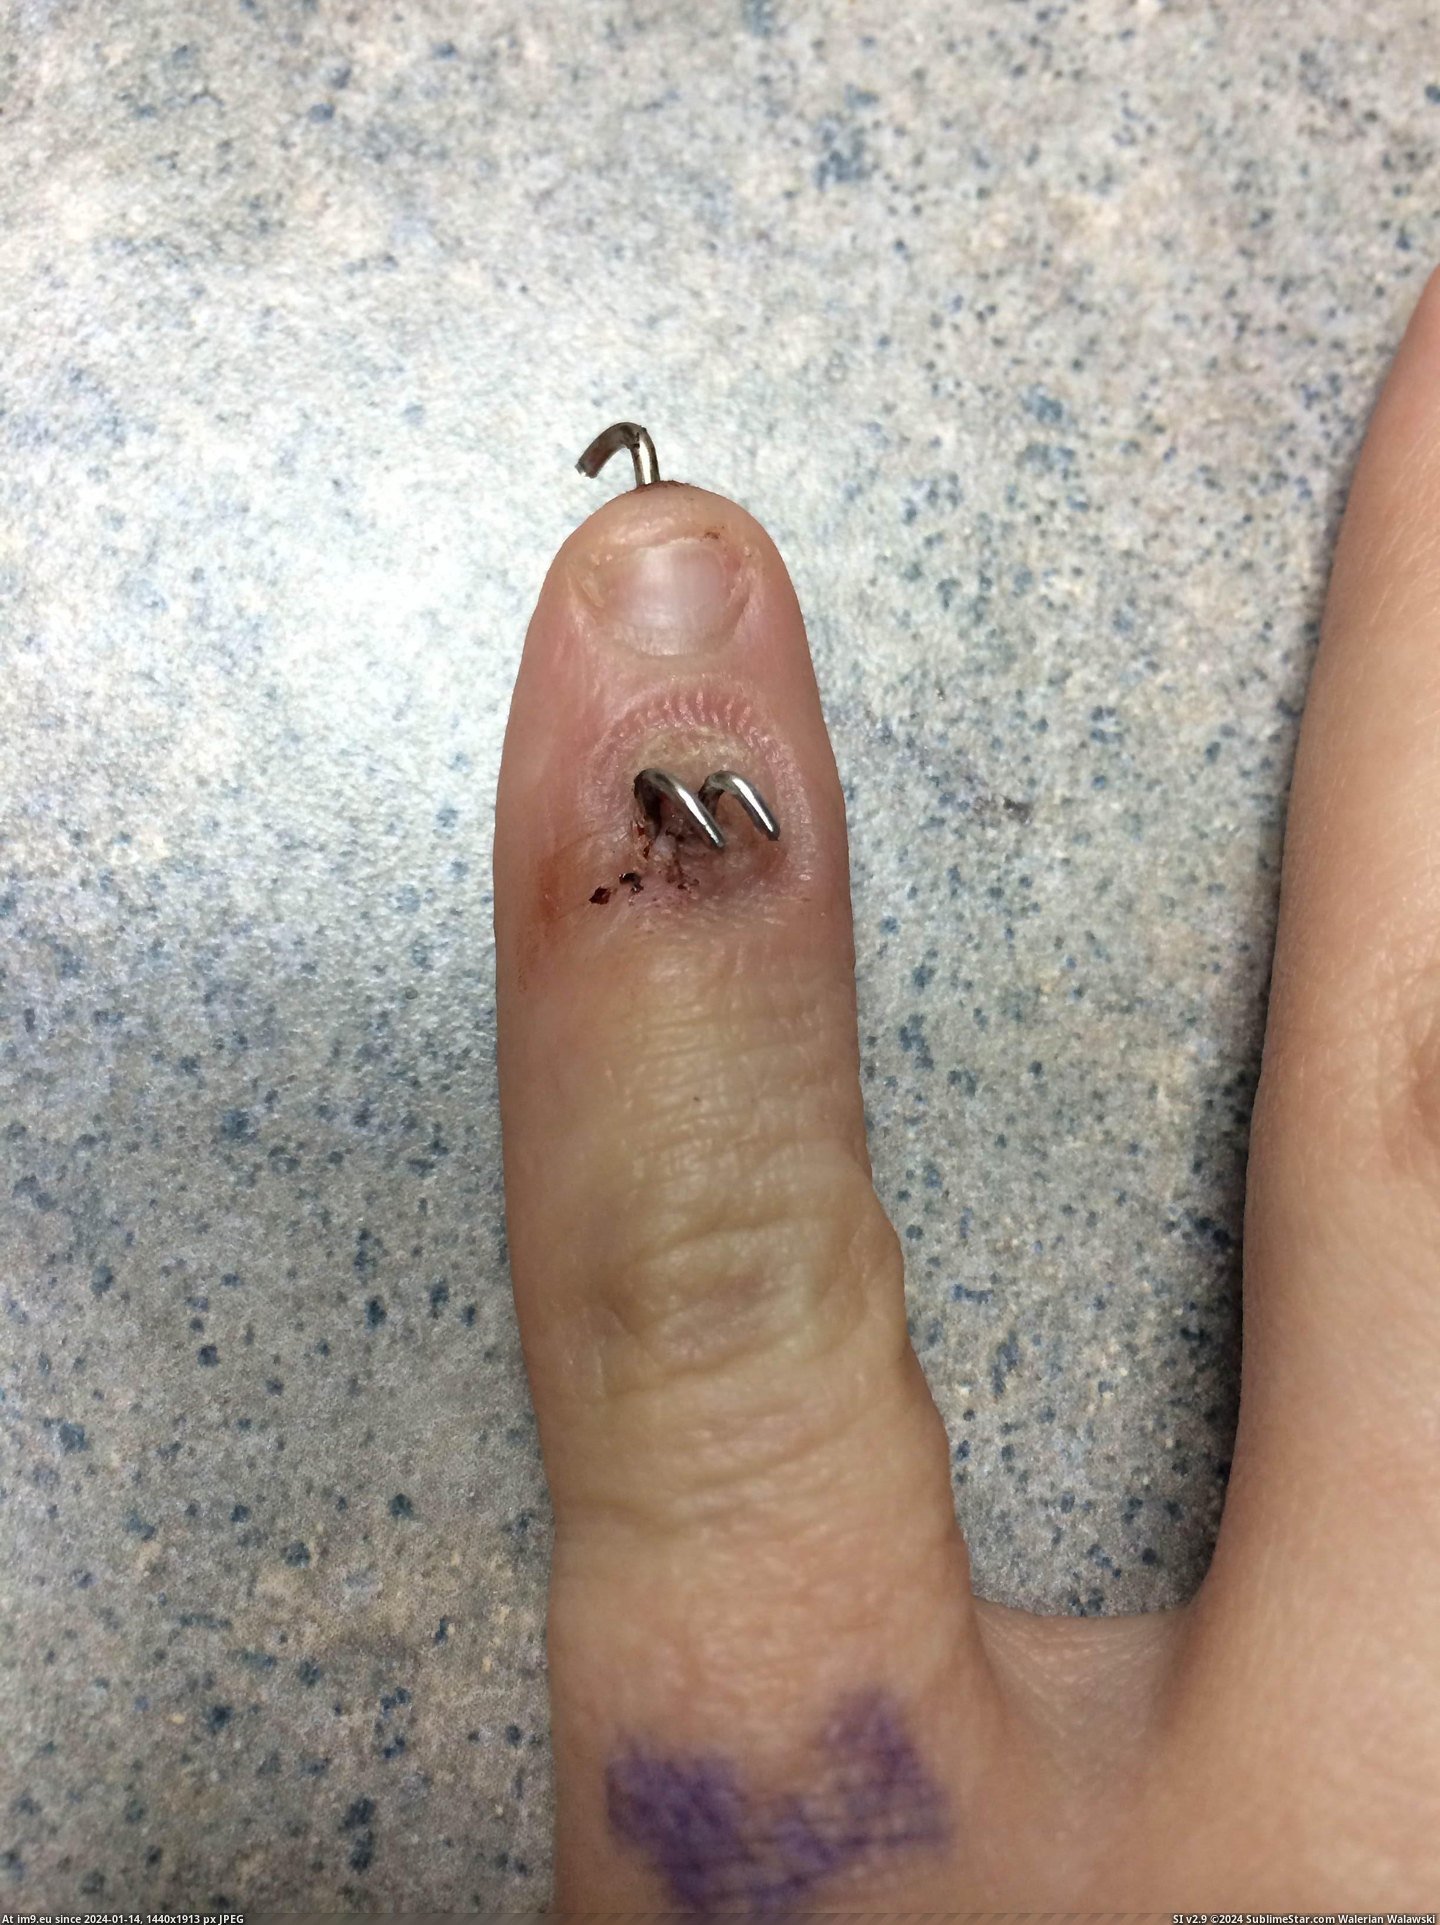 #Wtf #Wife #Pinky #Finger #Broken [Wtf] My Wife's Broken Pinky Finger 3 Pic. (Изображение из альбом My r/WTF favs))